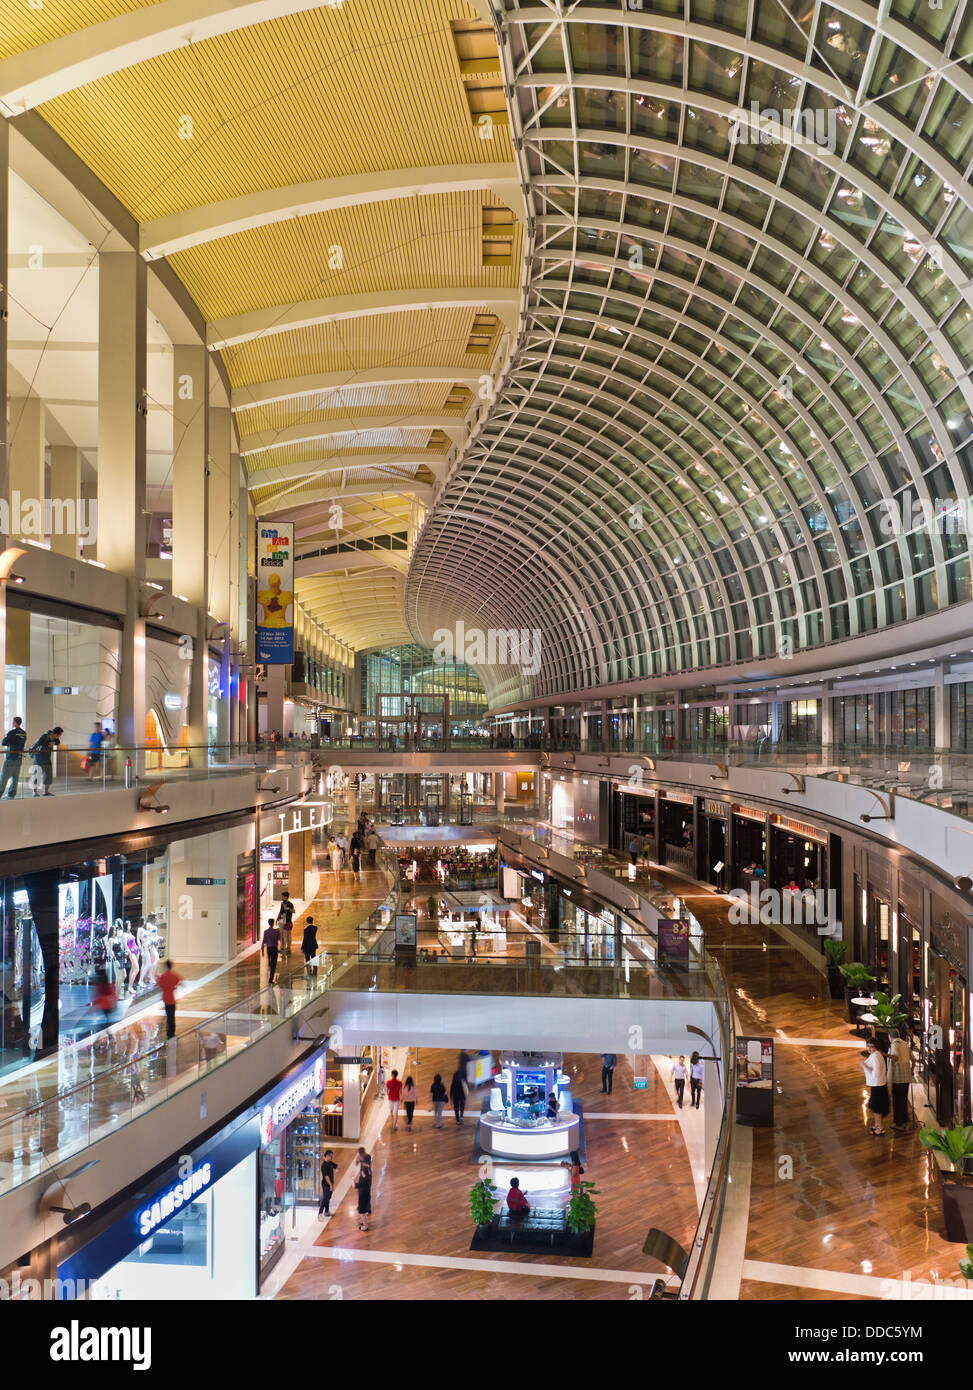 dh Marina Bay Sands MARINA BAY SINGAPORE modernen Luxus Shopping Mall Arcade-Innenraum Architekturzentrum Stockfoto